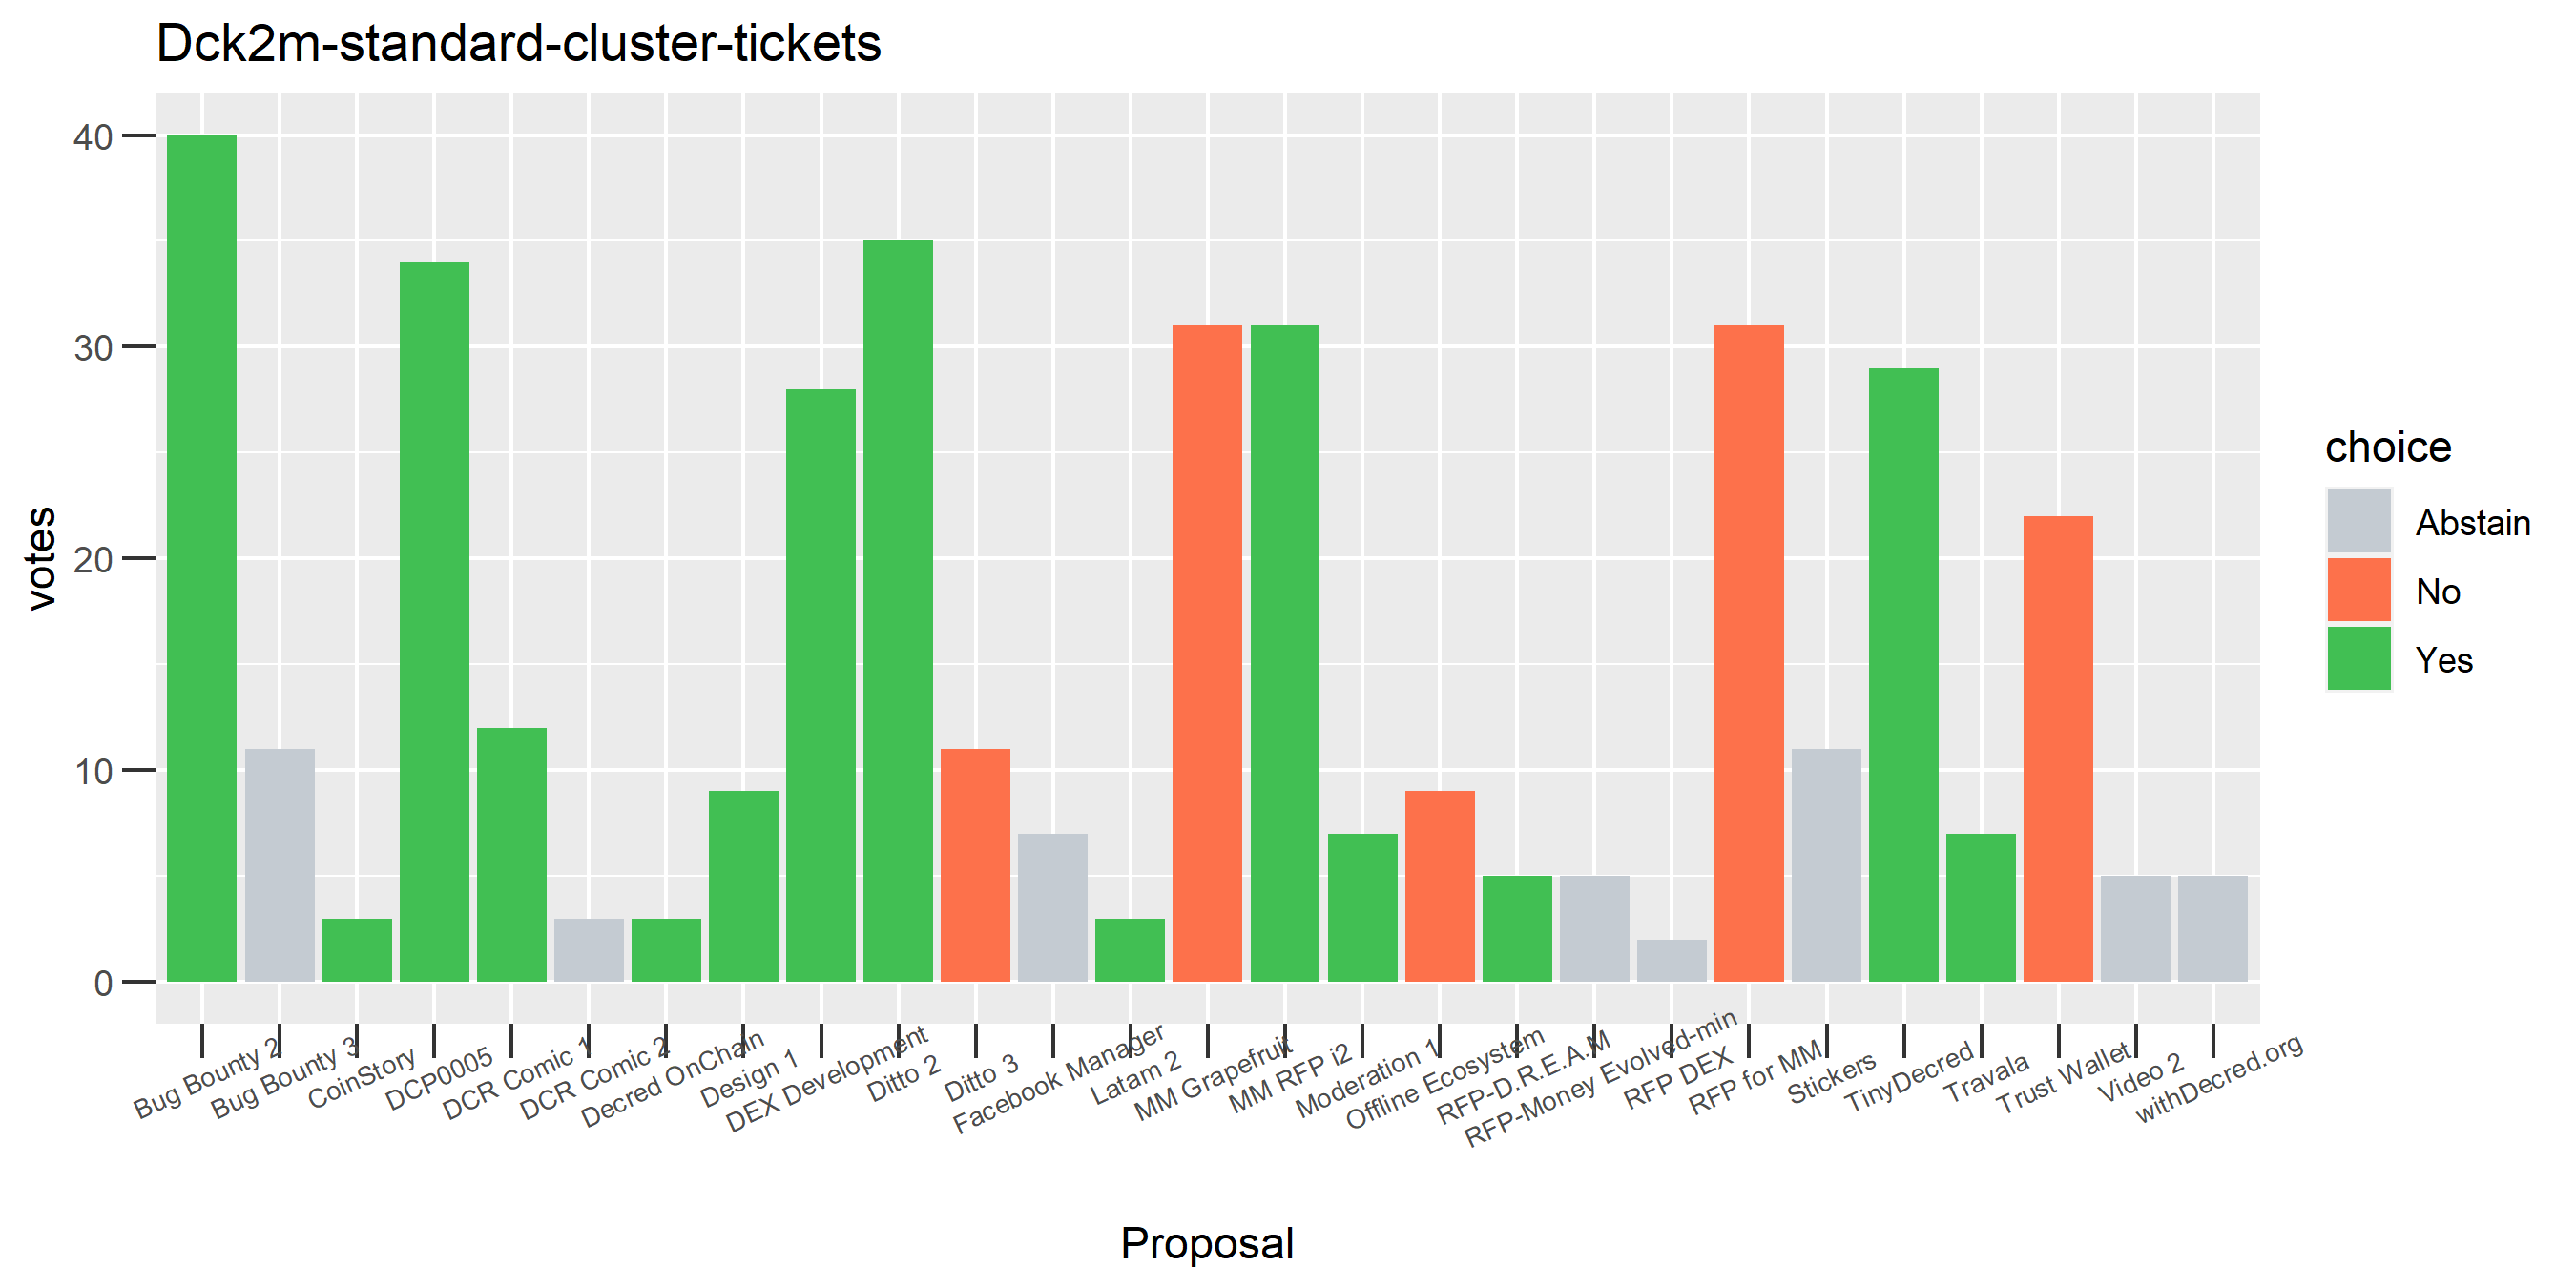 Dck2m-standard-cluster-tickets